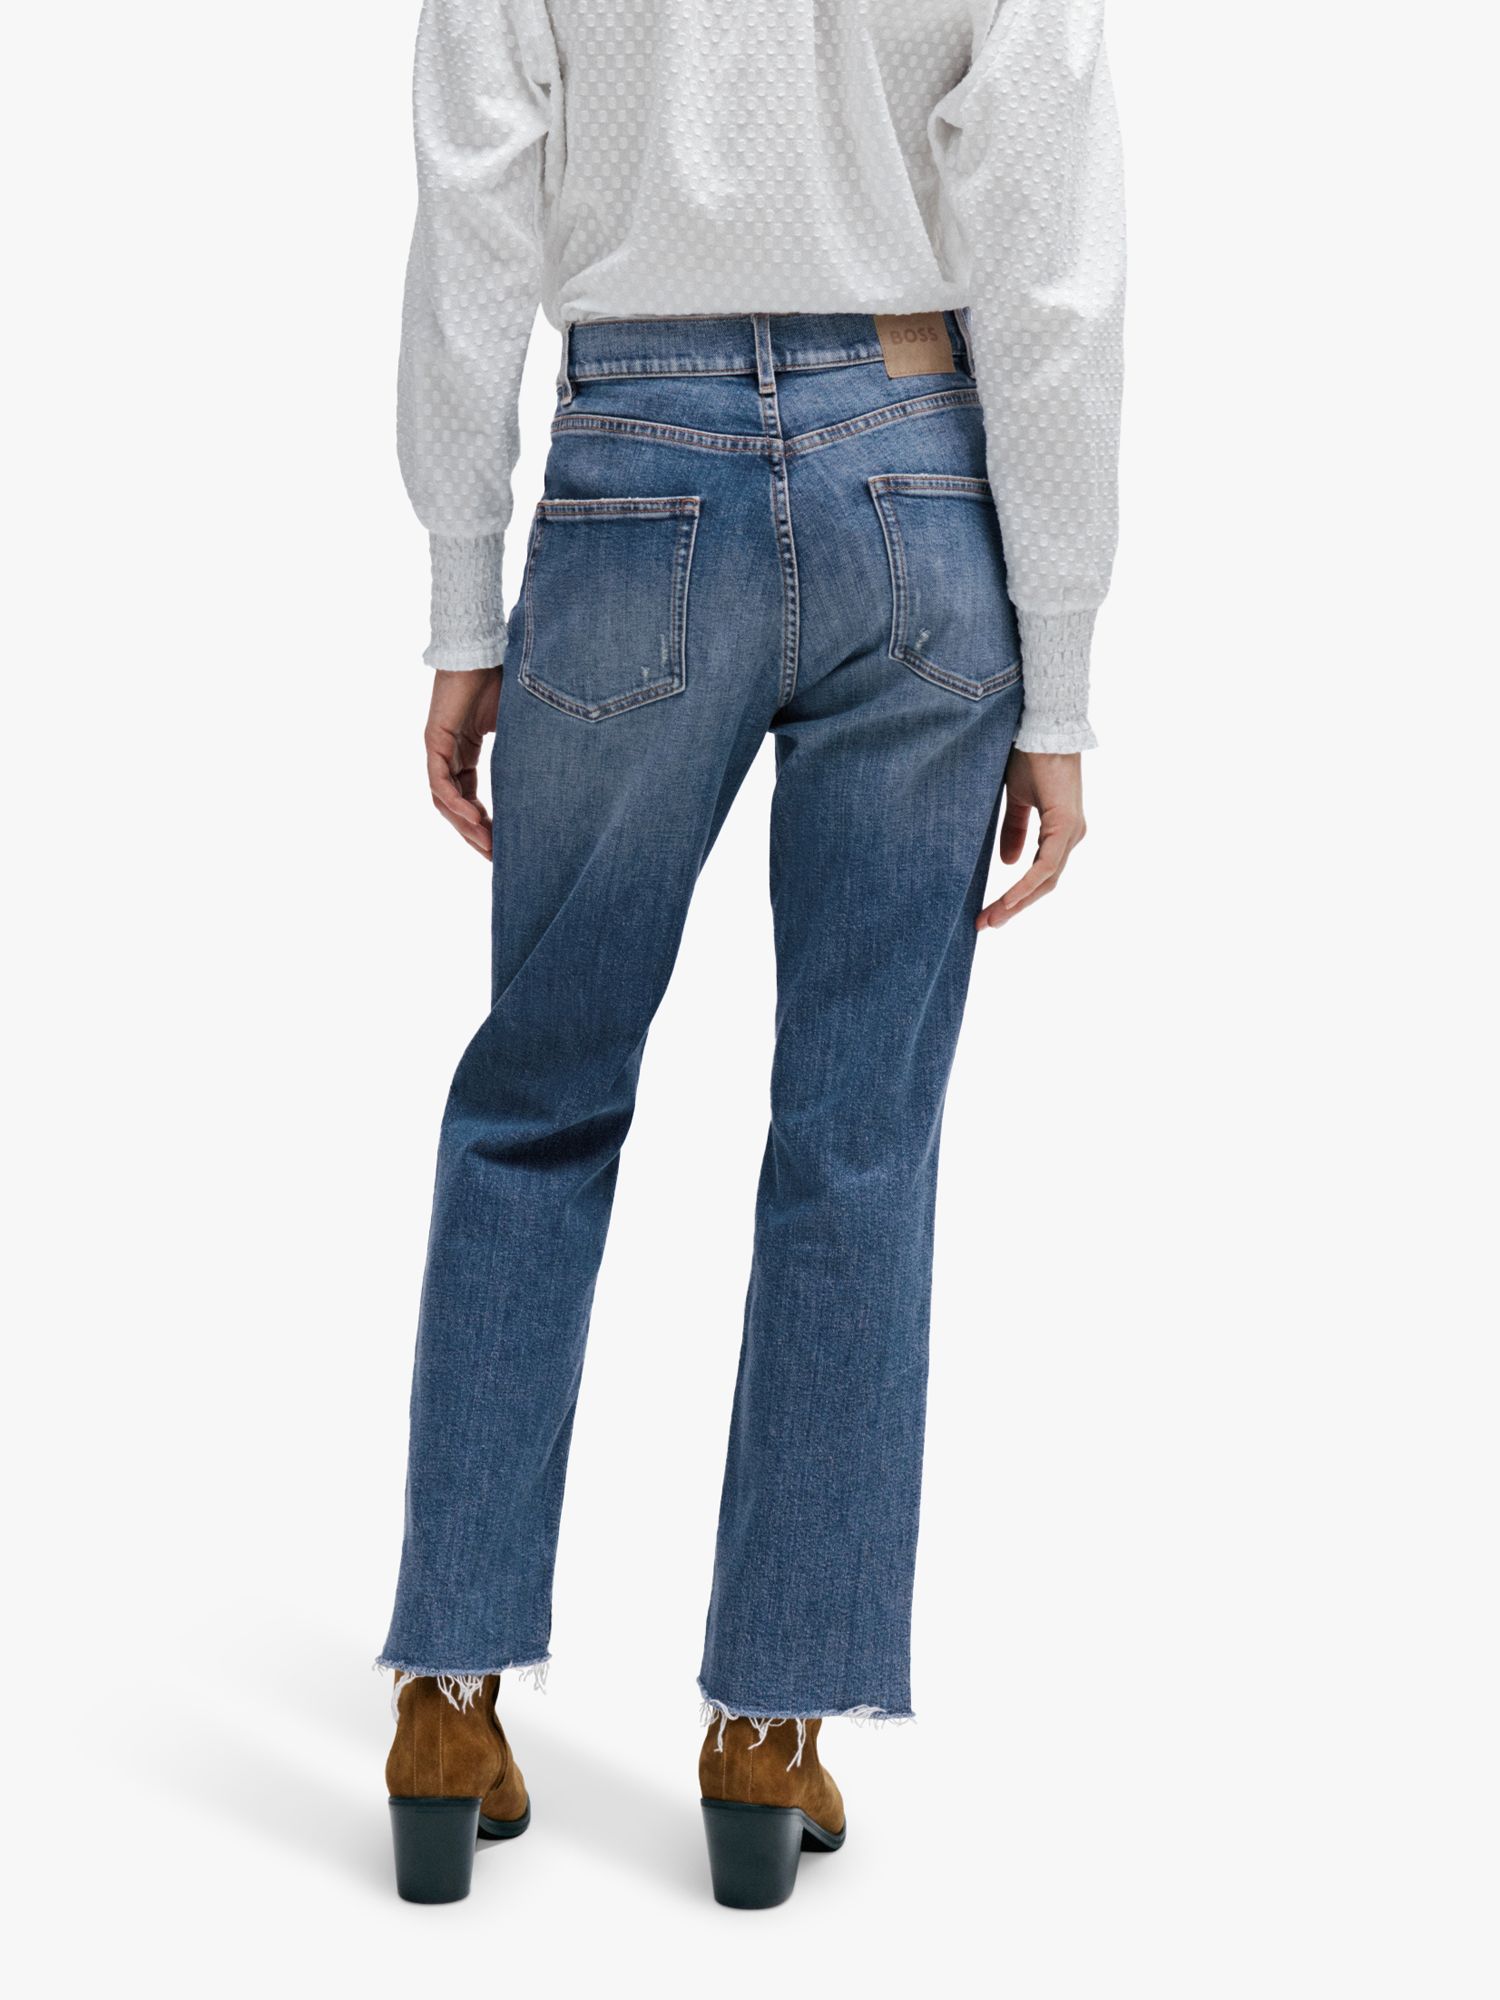 BOSS Cotton Blend Slim Jeans, Medium Blue at John Lewis & Partners